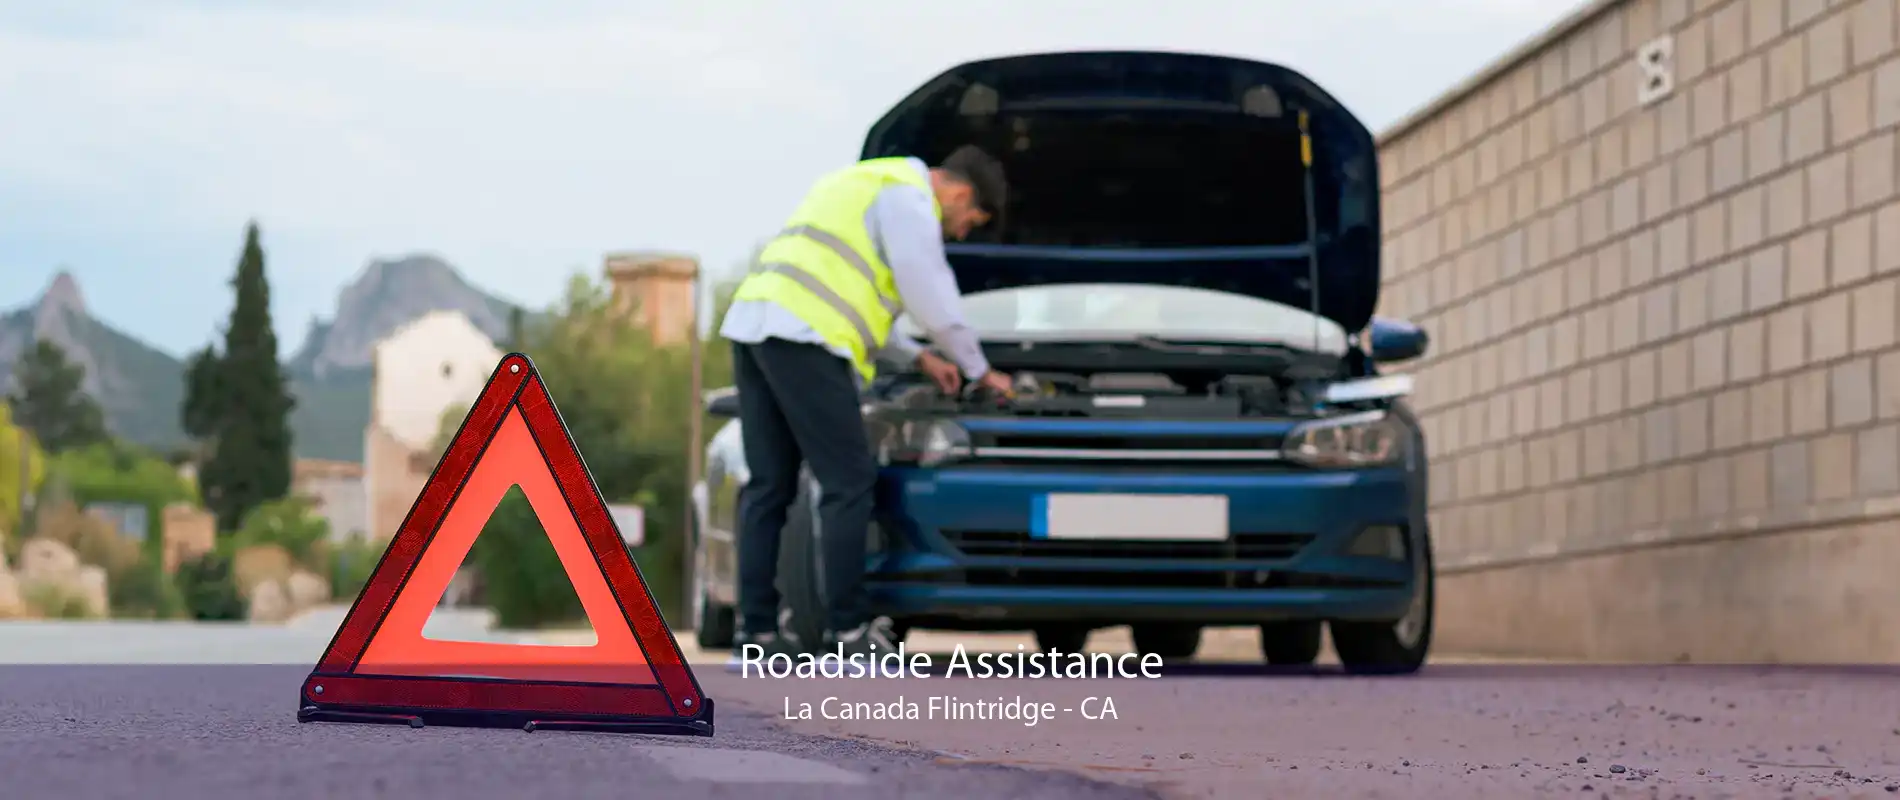 Roadside Assistance La Canada Flintridge - CA